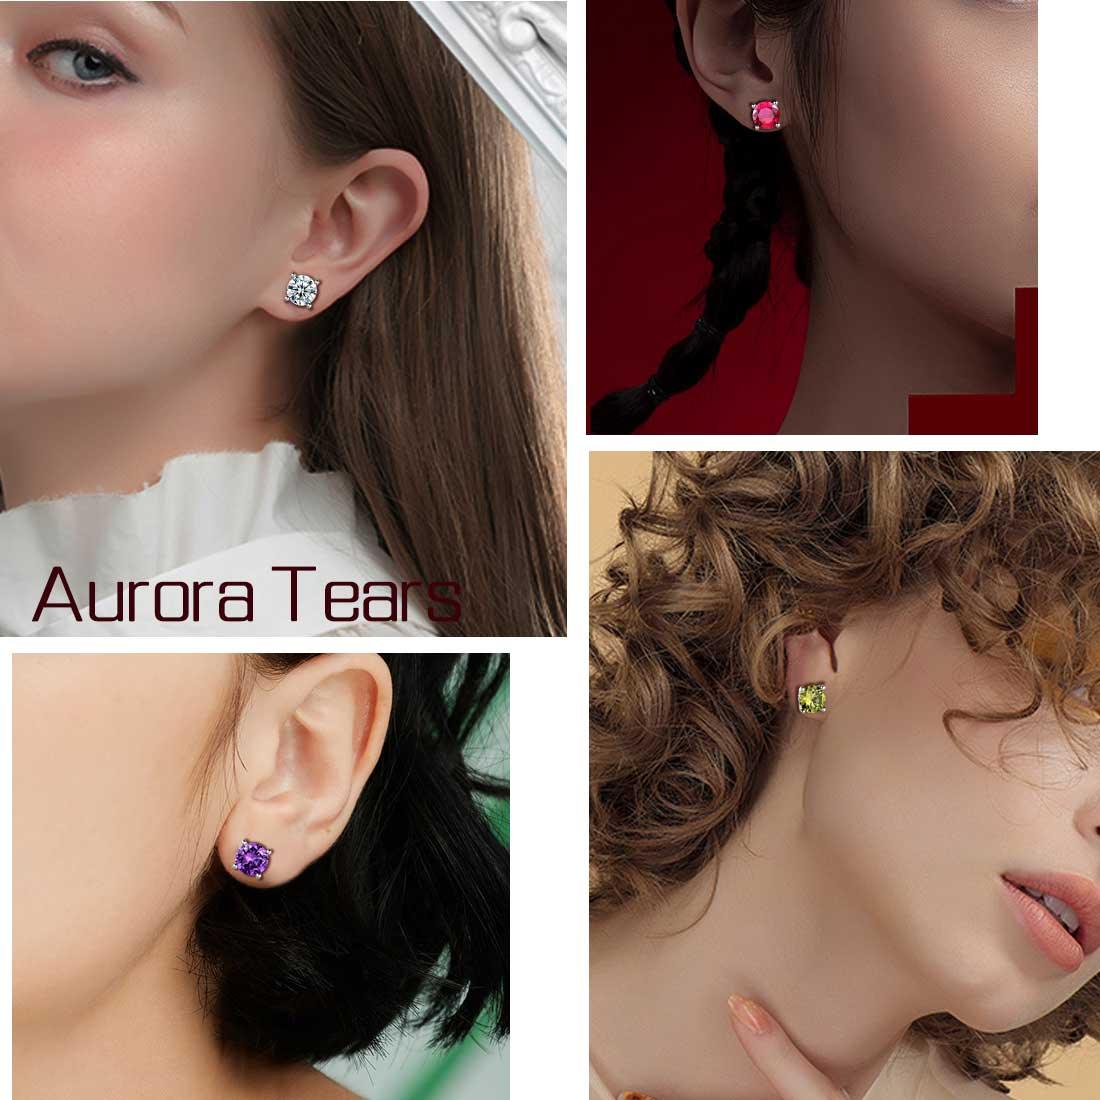 Round Birthstone February Amethyst Earrings Sterling Silver - Earrings - Aurora Tears